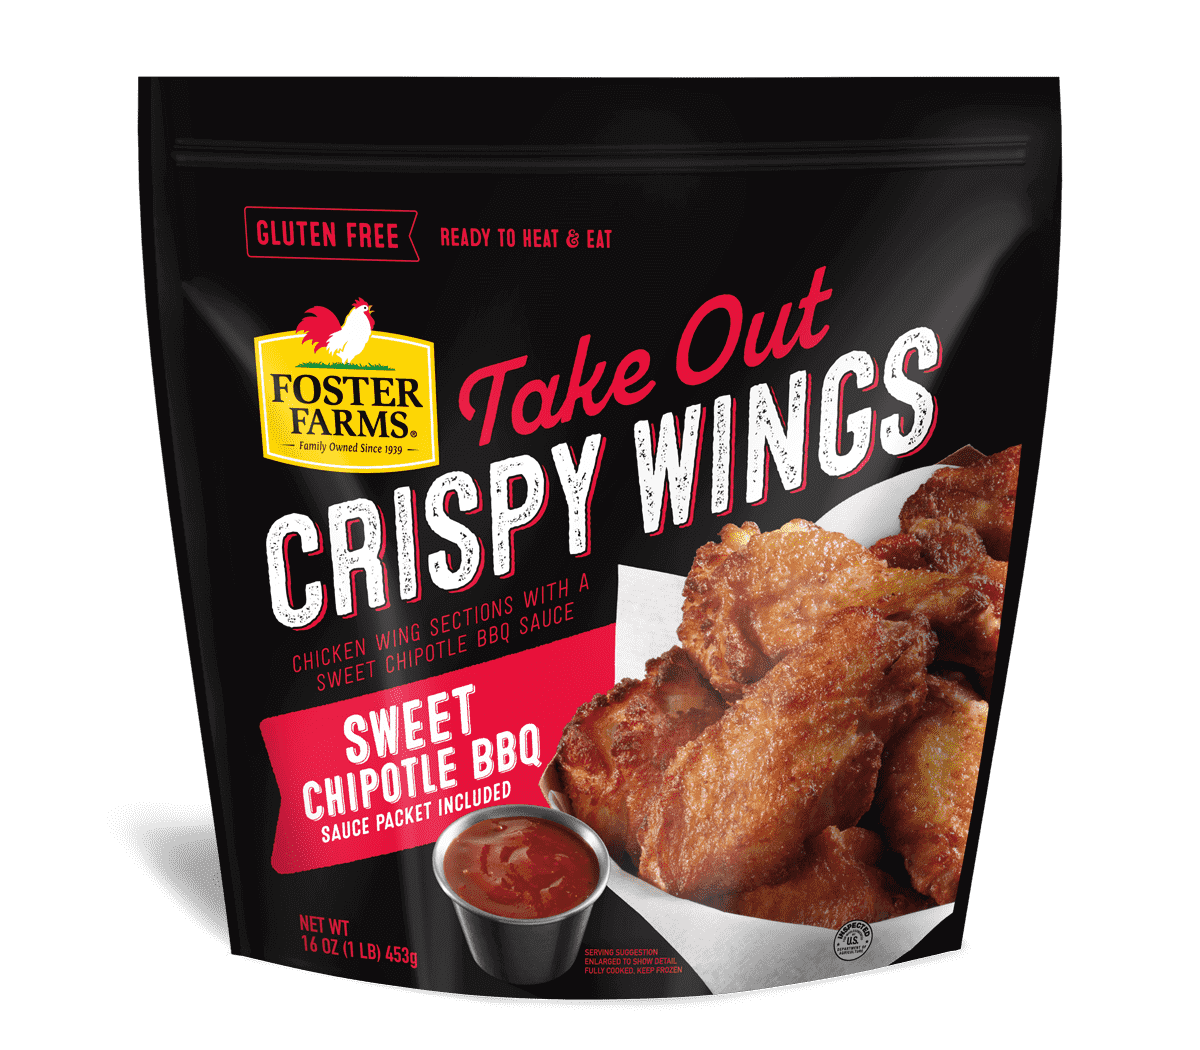 Sweet Chipotle BBQ Crispy Wings